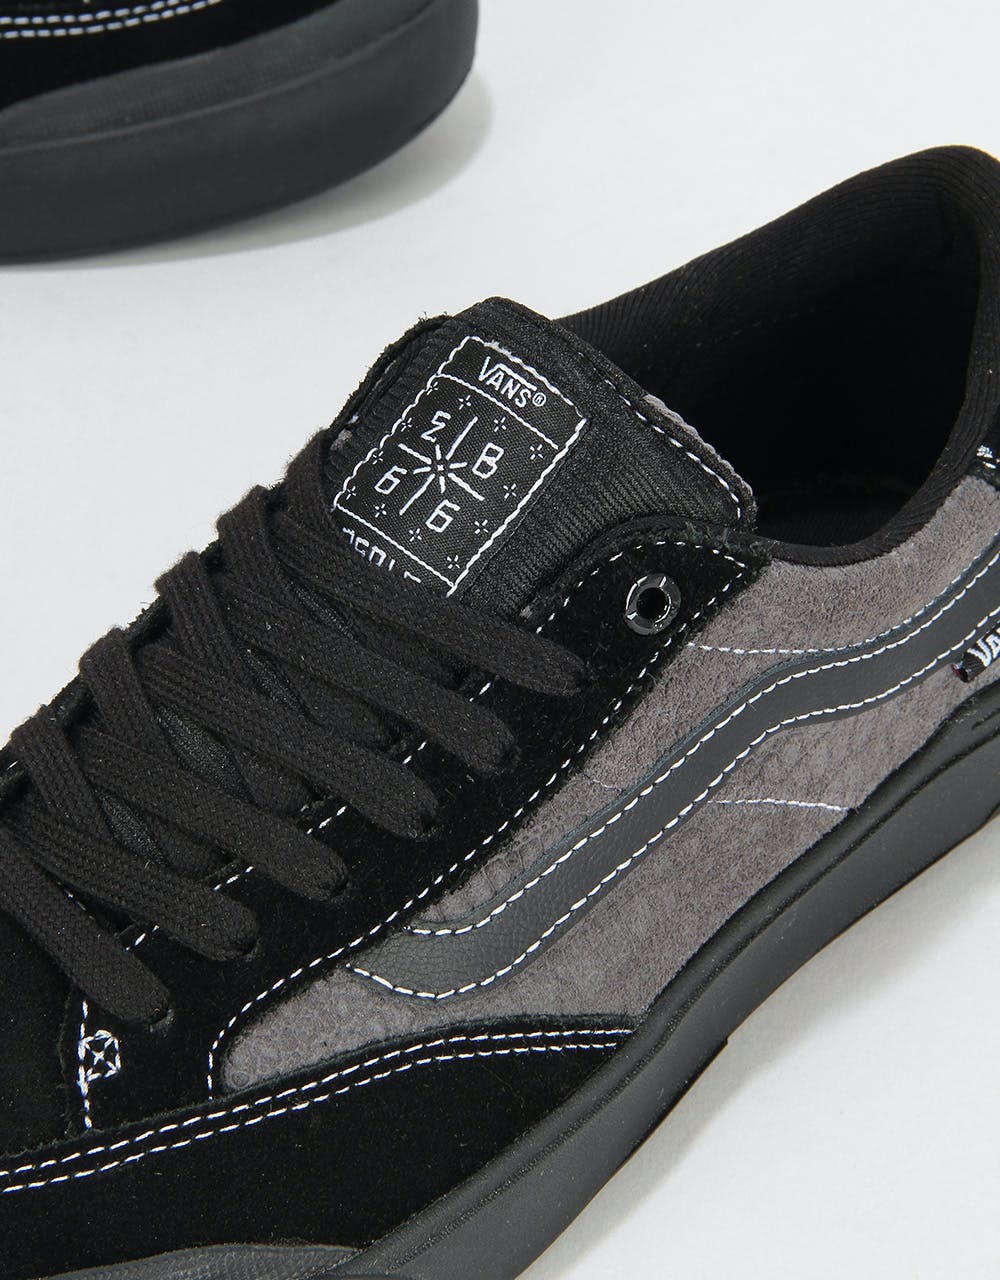 Vans Berle Pro Skate Shoes - (Croc) Black/Pewter